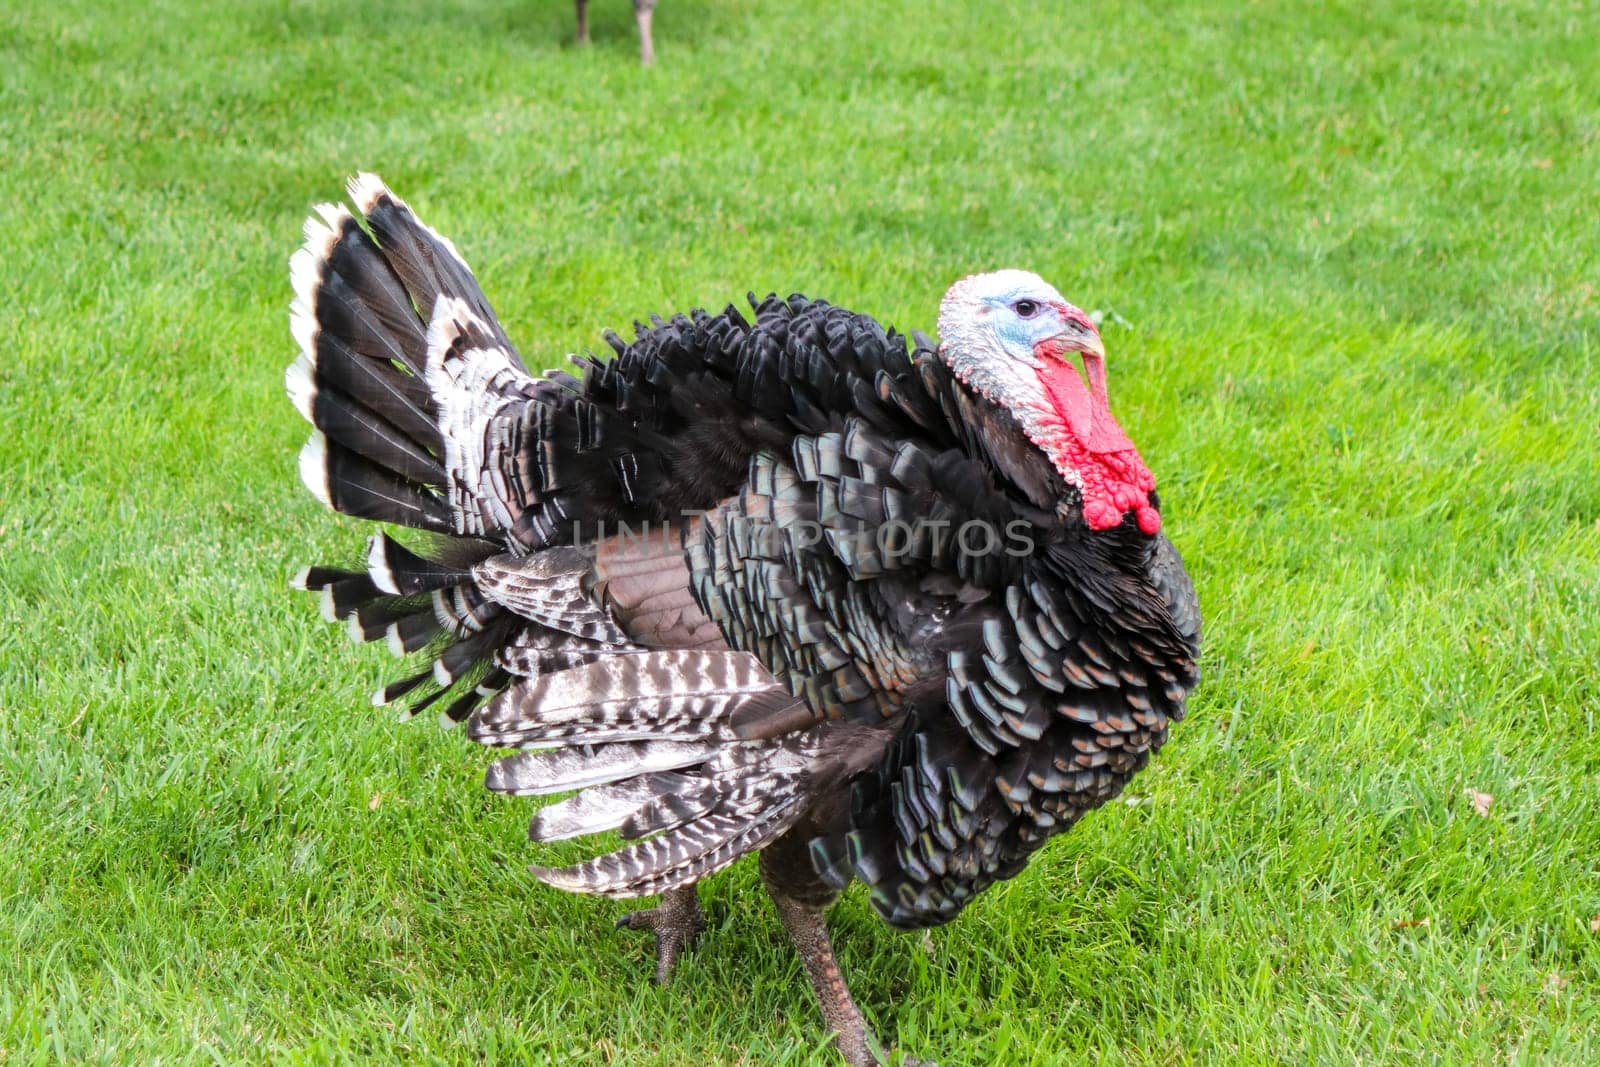 Male Turkey running around with the chickens by gena_wells